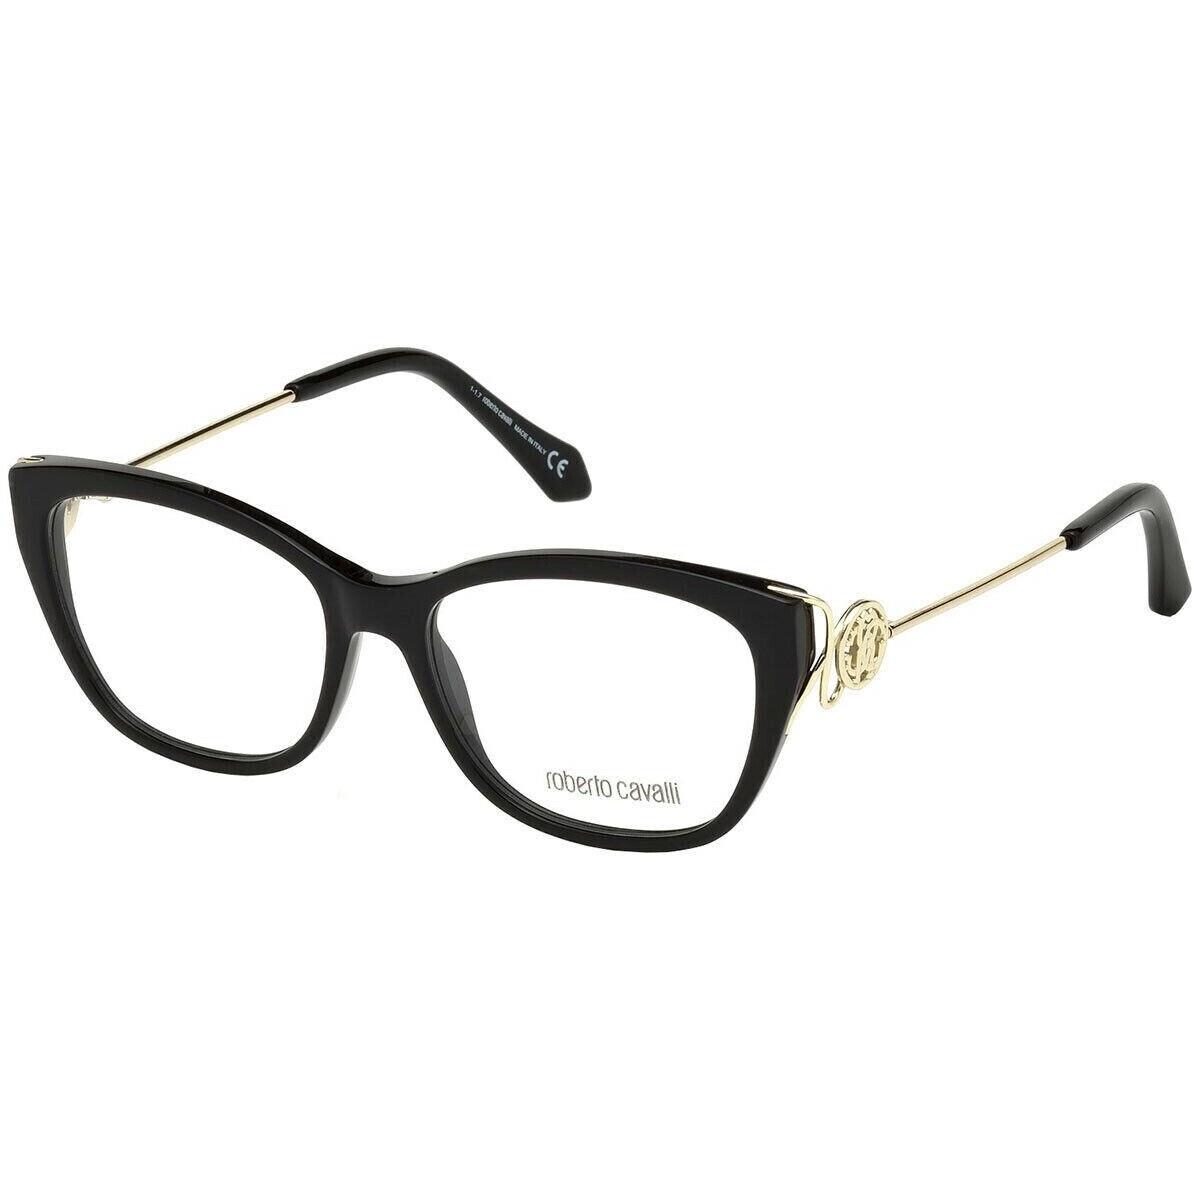 Roberto Cavalli Eyeglasses Focagnano 5051 001 Black Full Rim Frame 51MM Rx-able